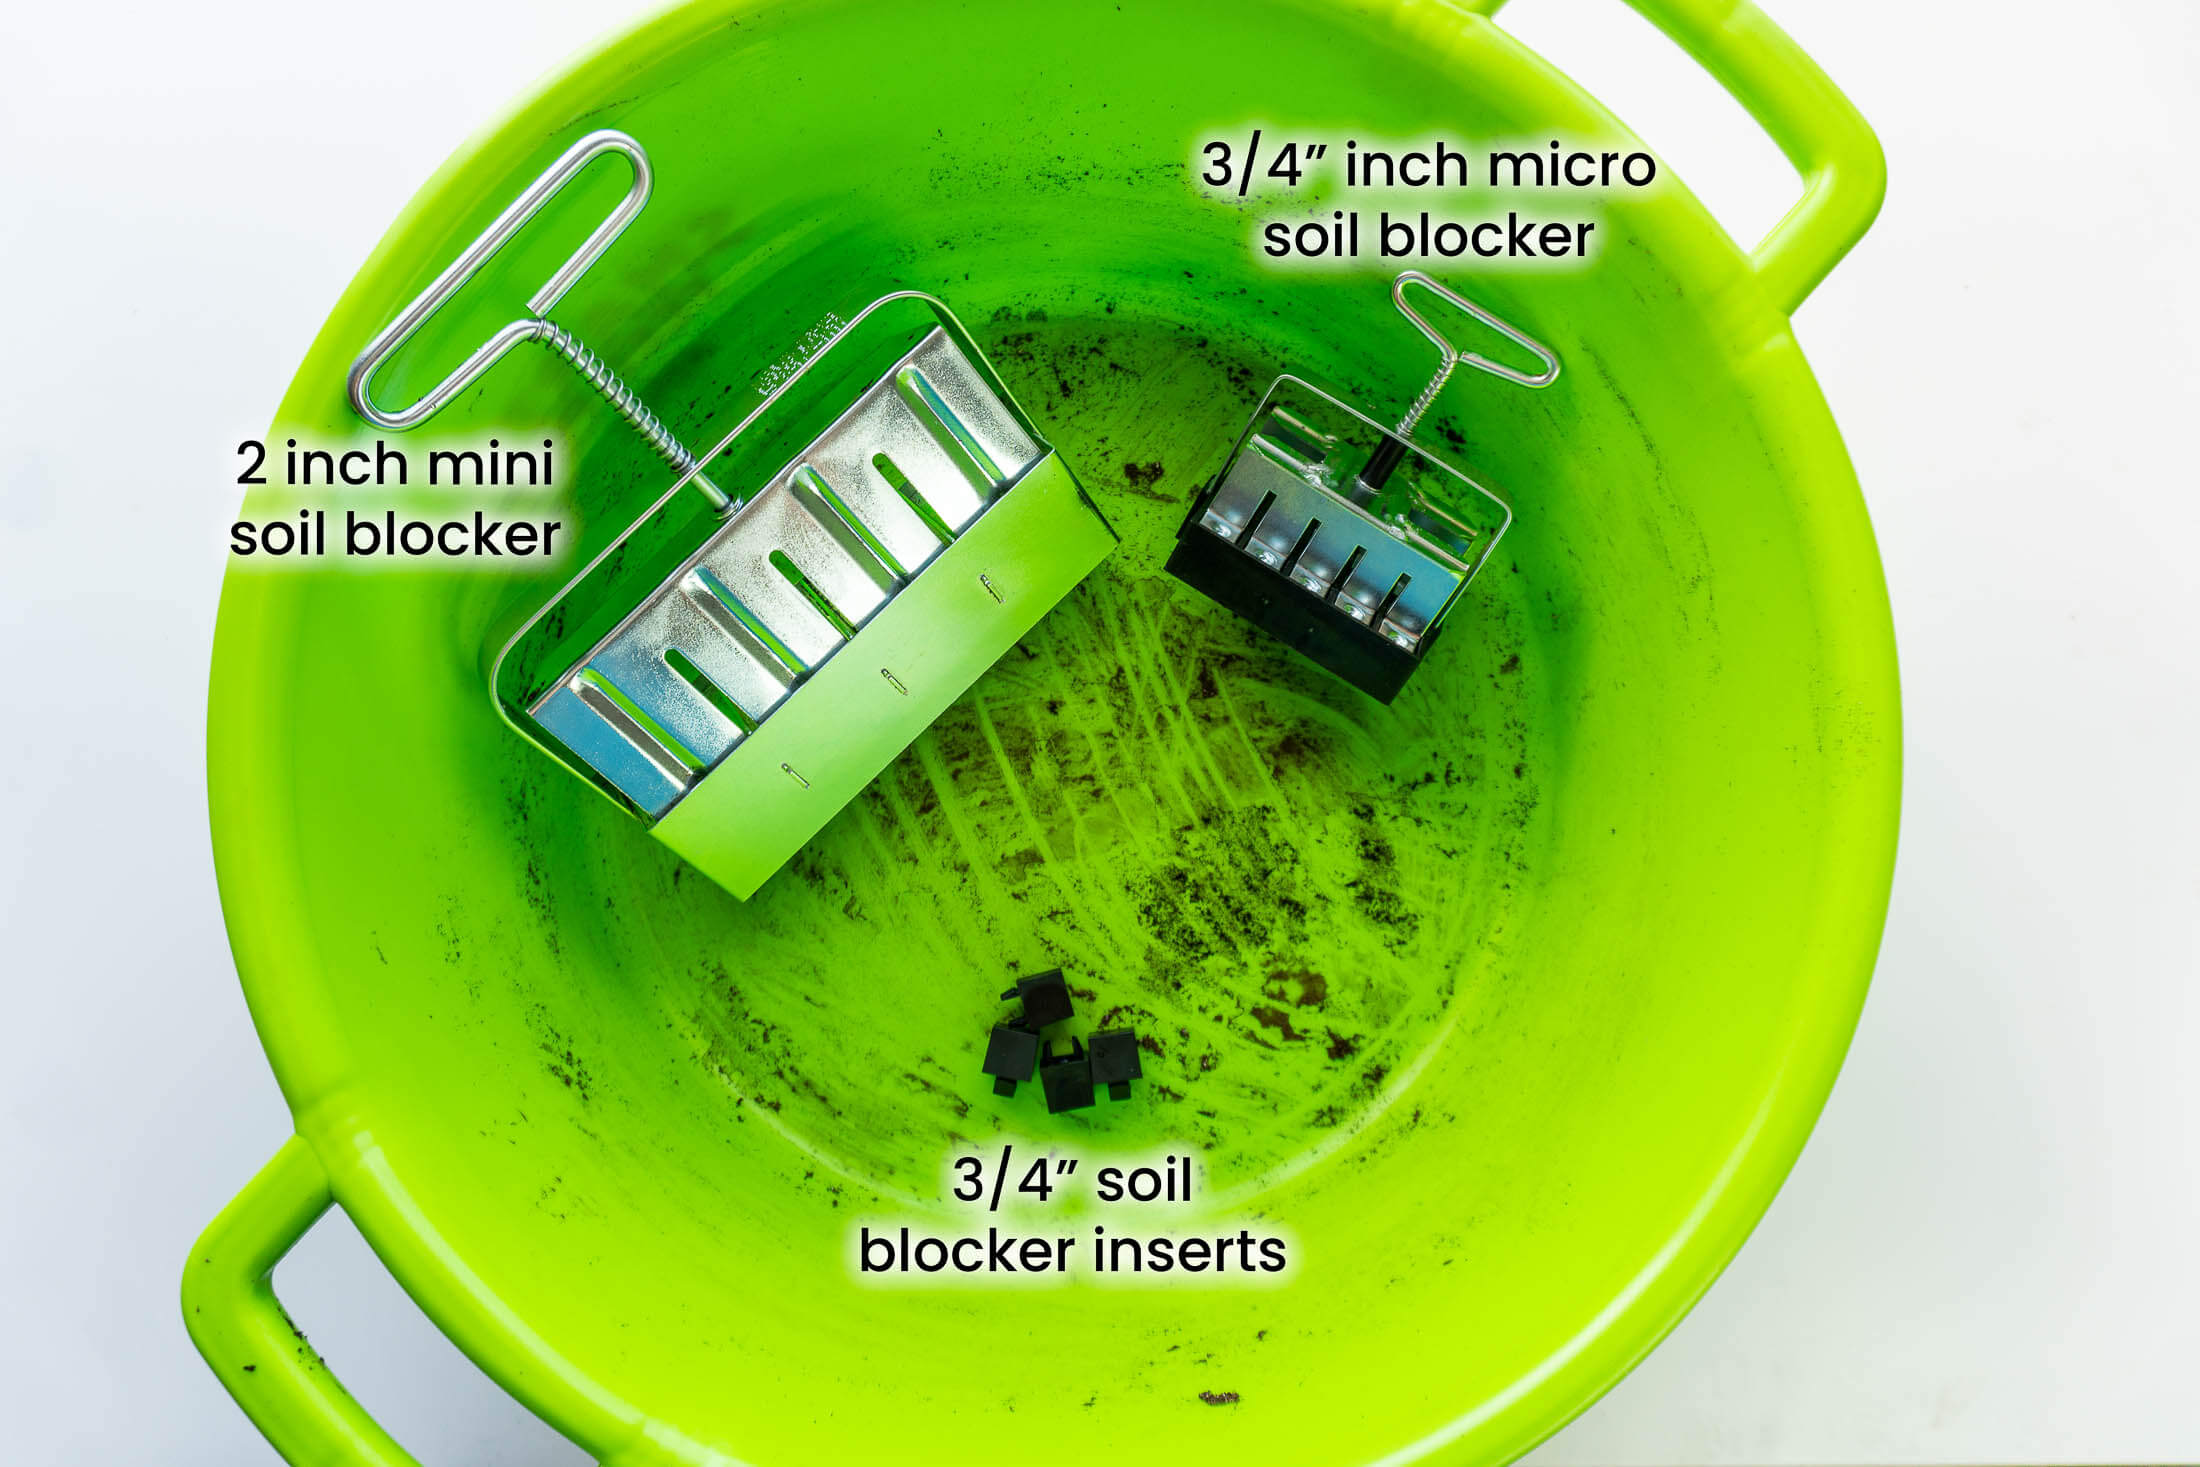 Mini and micro soil blocker in a green feed tub.